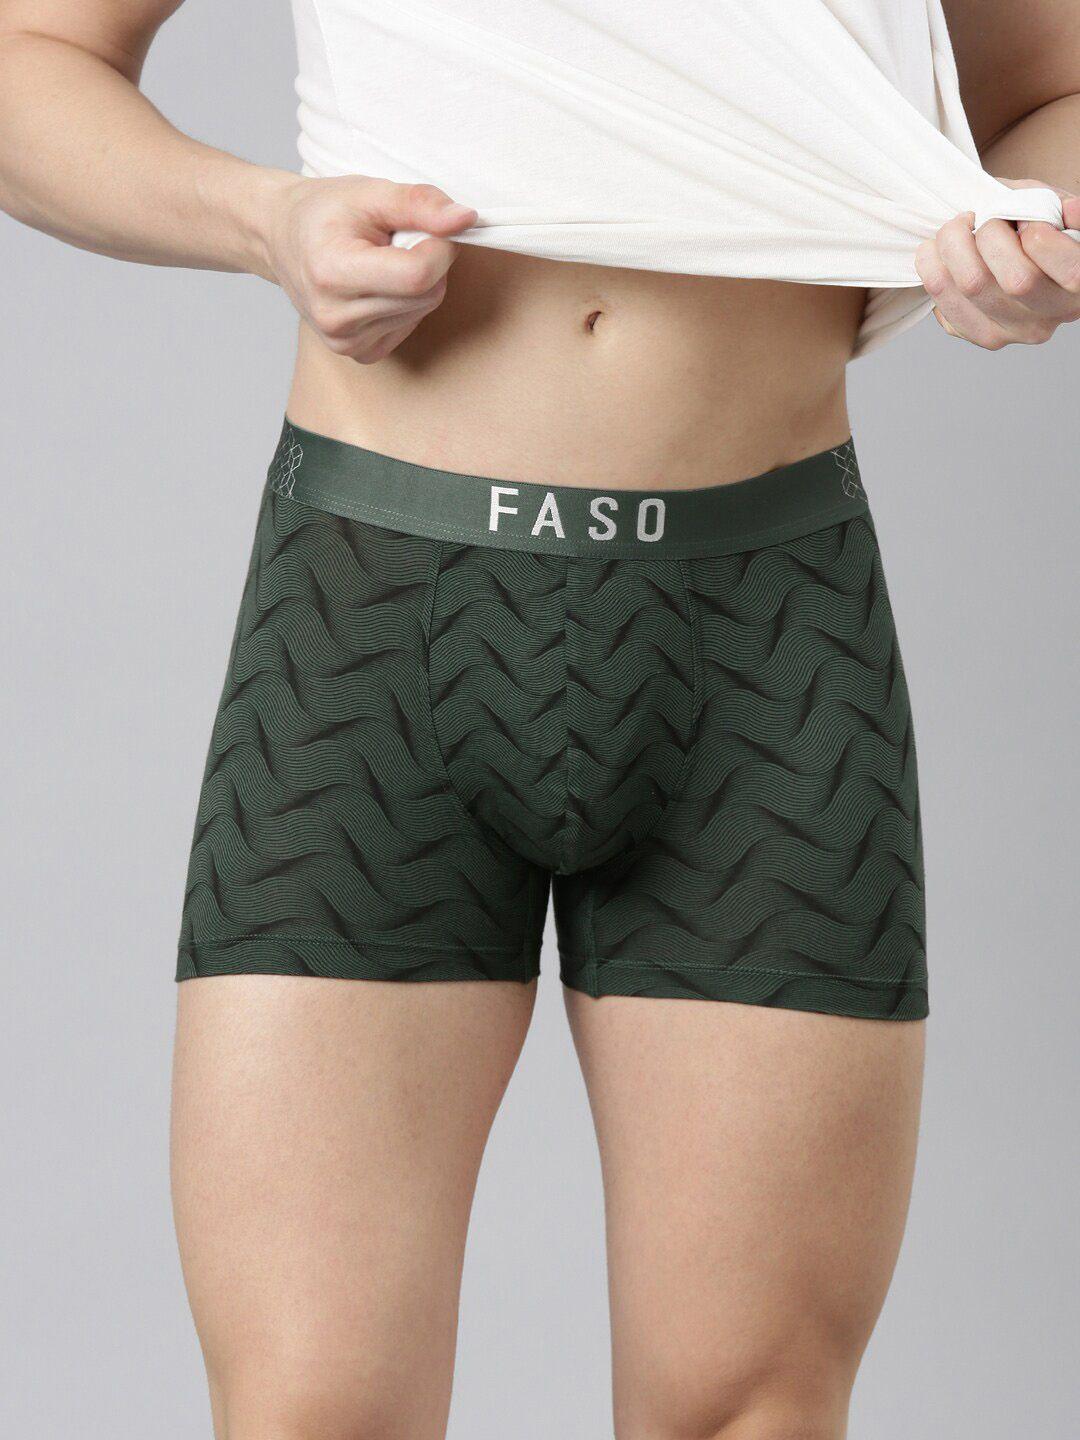 faso printed mid rise label free organic cotton trunk fs3007-sq-olivegreen1